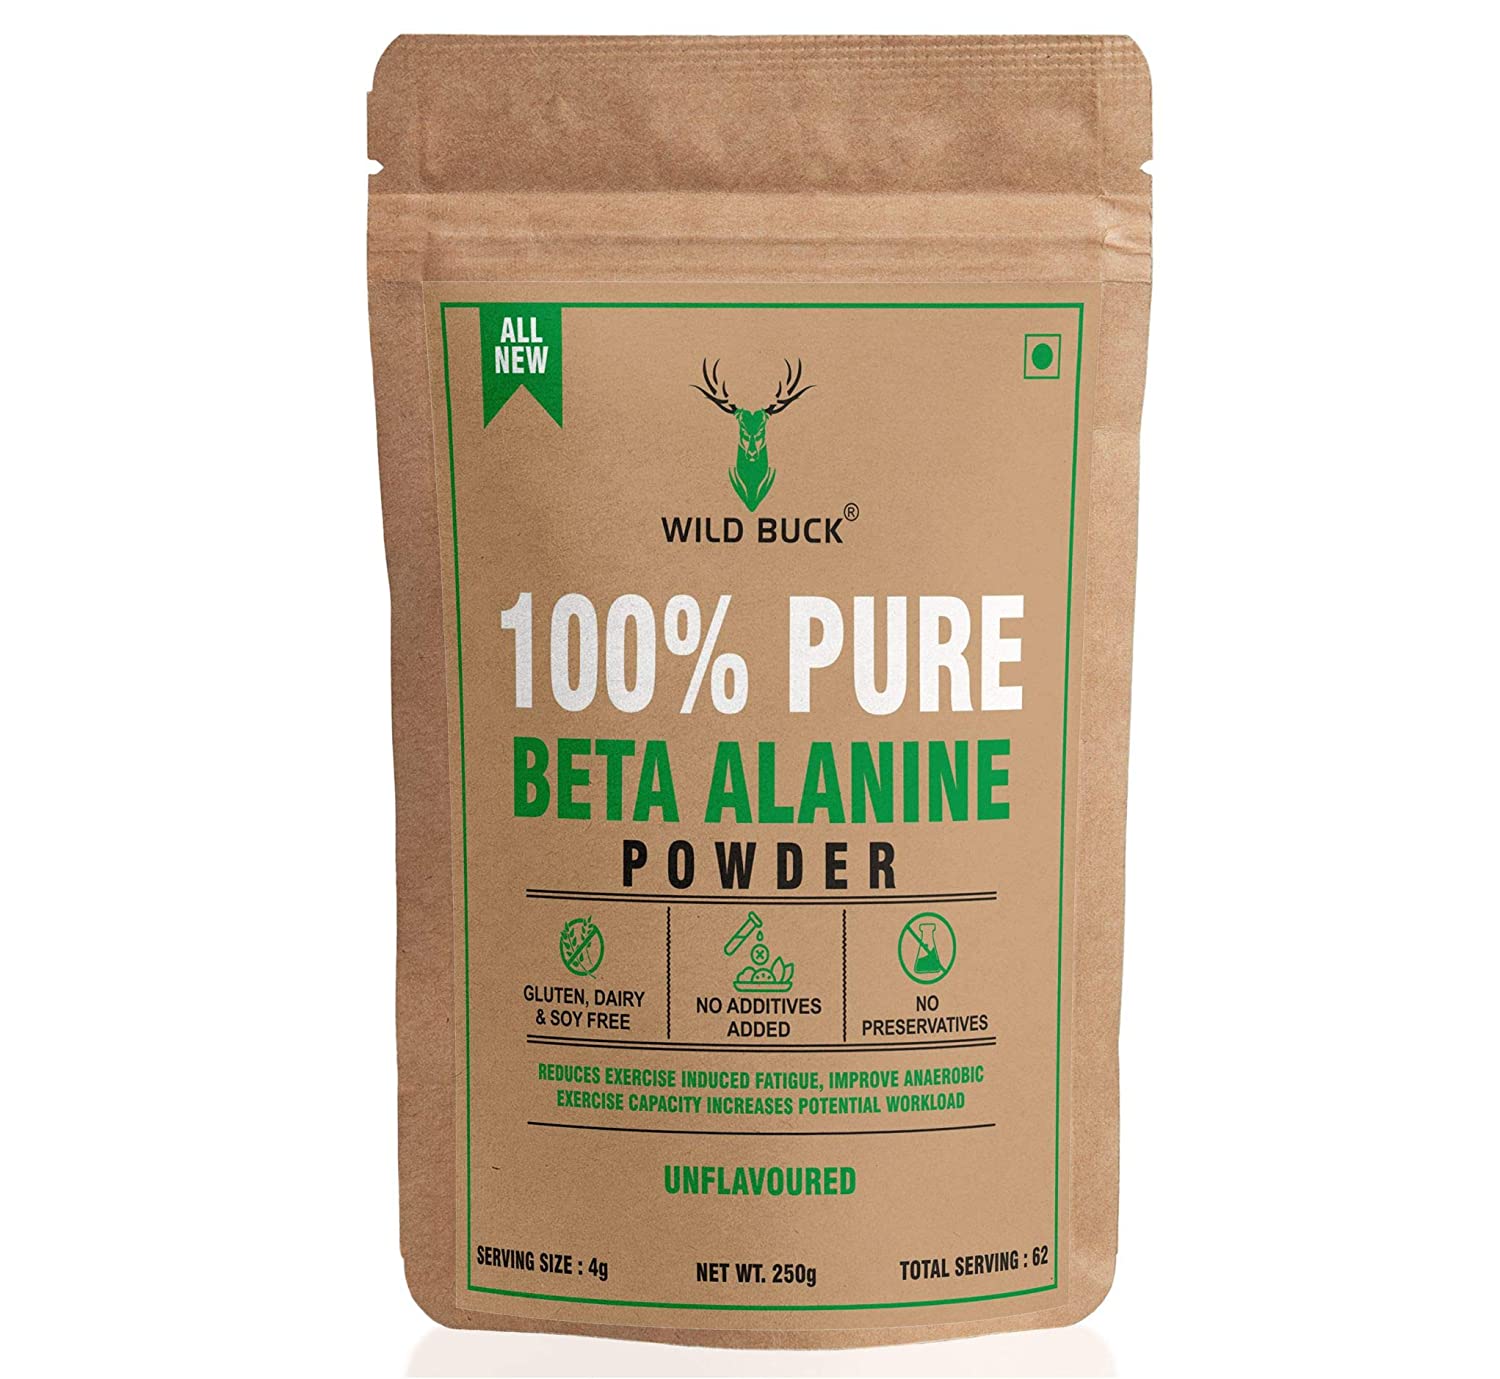 Wild Buck 100% Pure Beta Alanine Powder Image